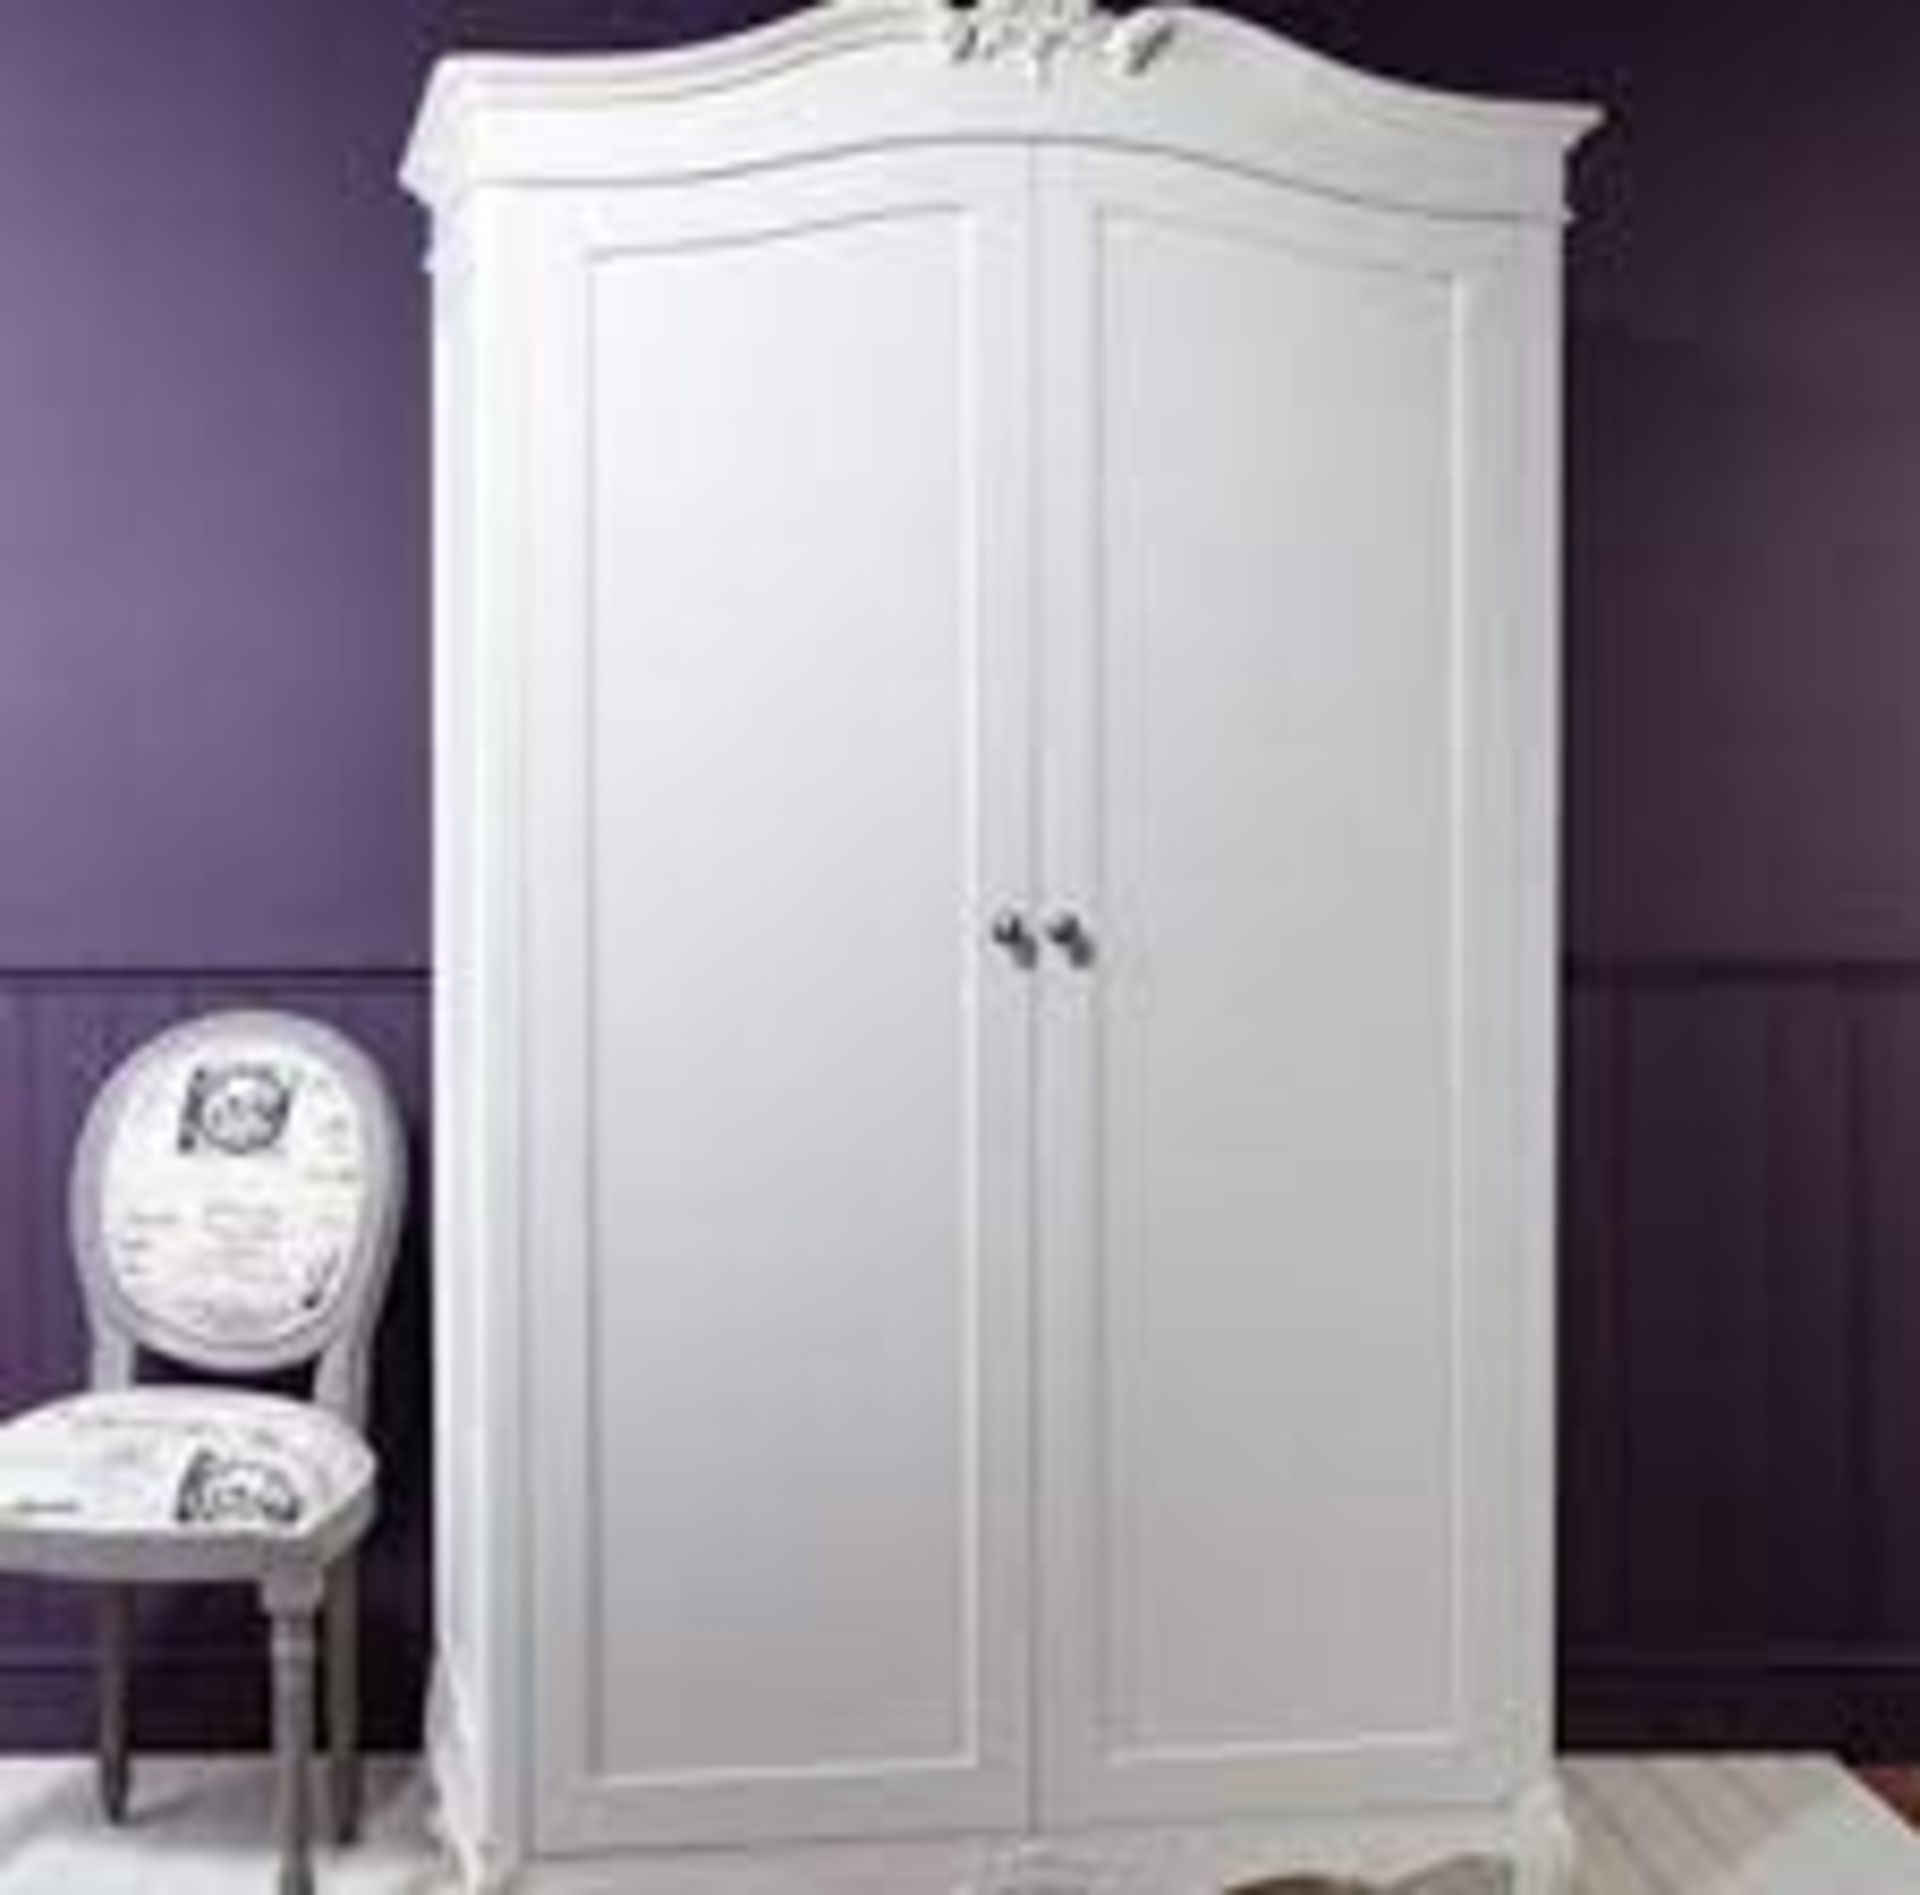 Chic 2 Door Wardrobe Vanilla White Applied By Hand , The Calming Vanilla White Paint Adds A Feminine